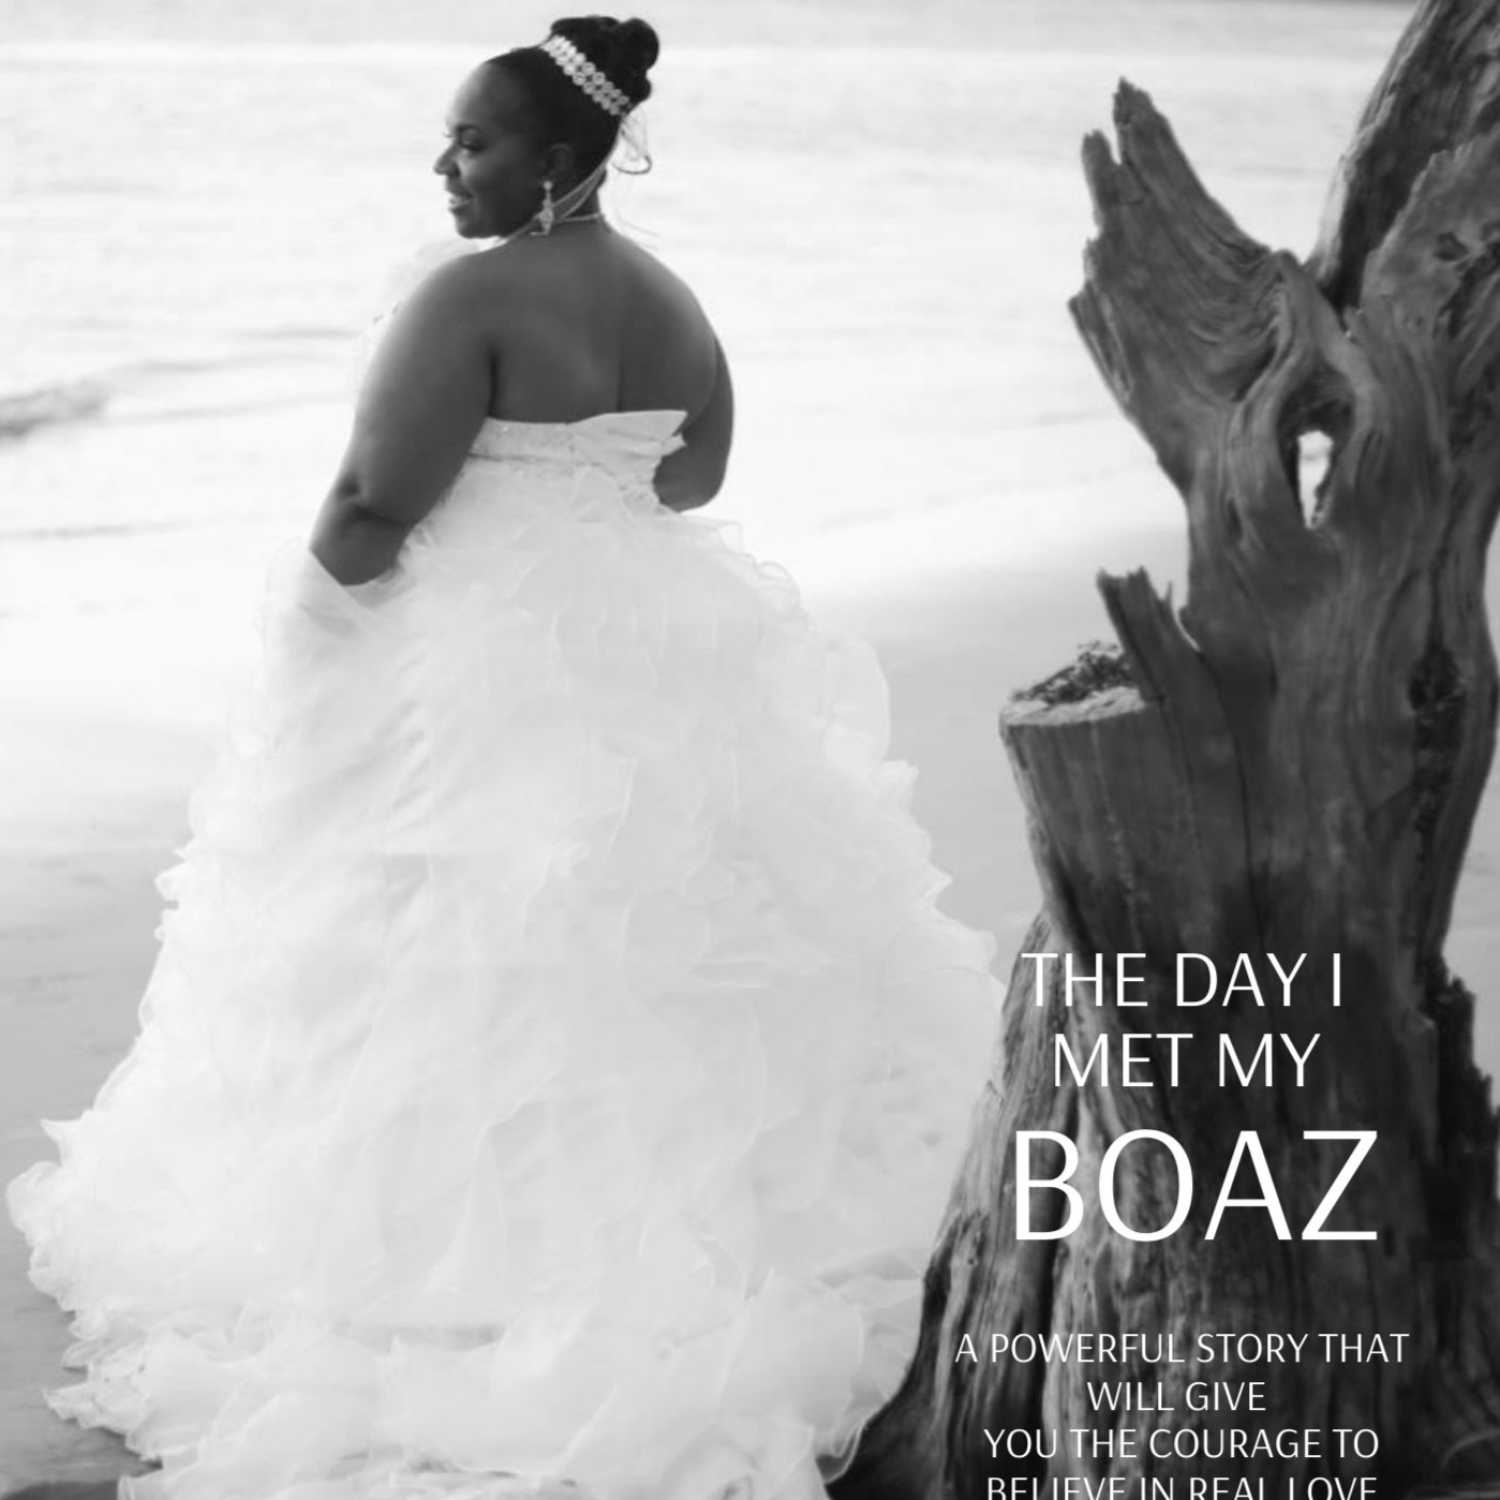 Episode 2: The Day I Met My Boaz